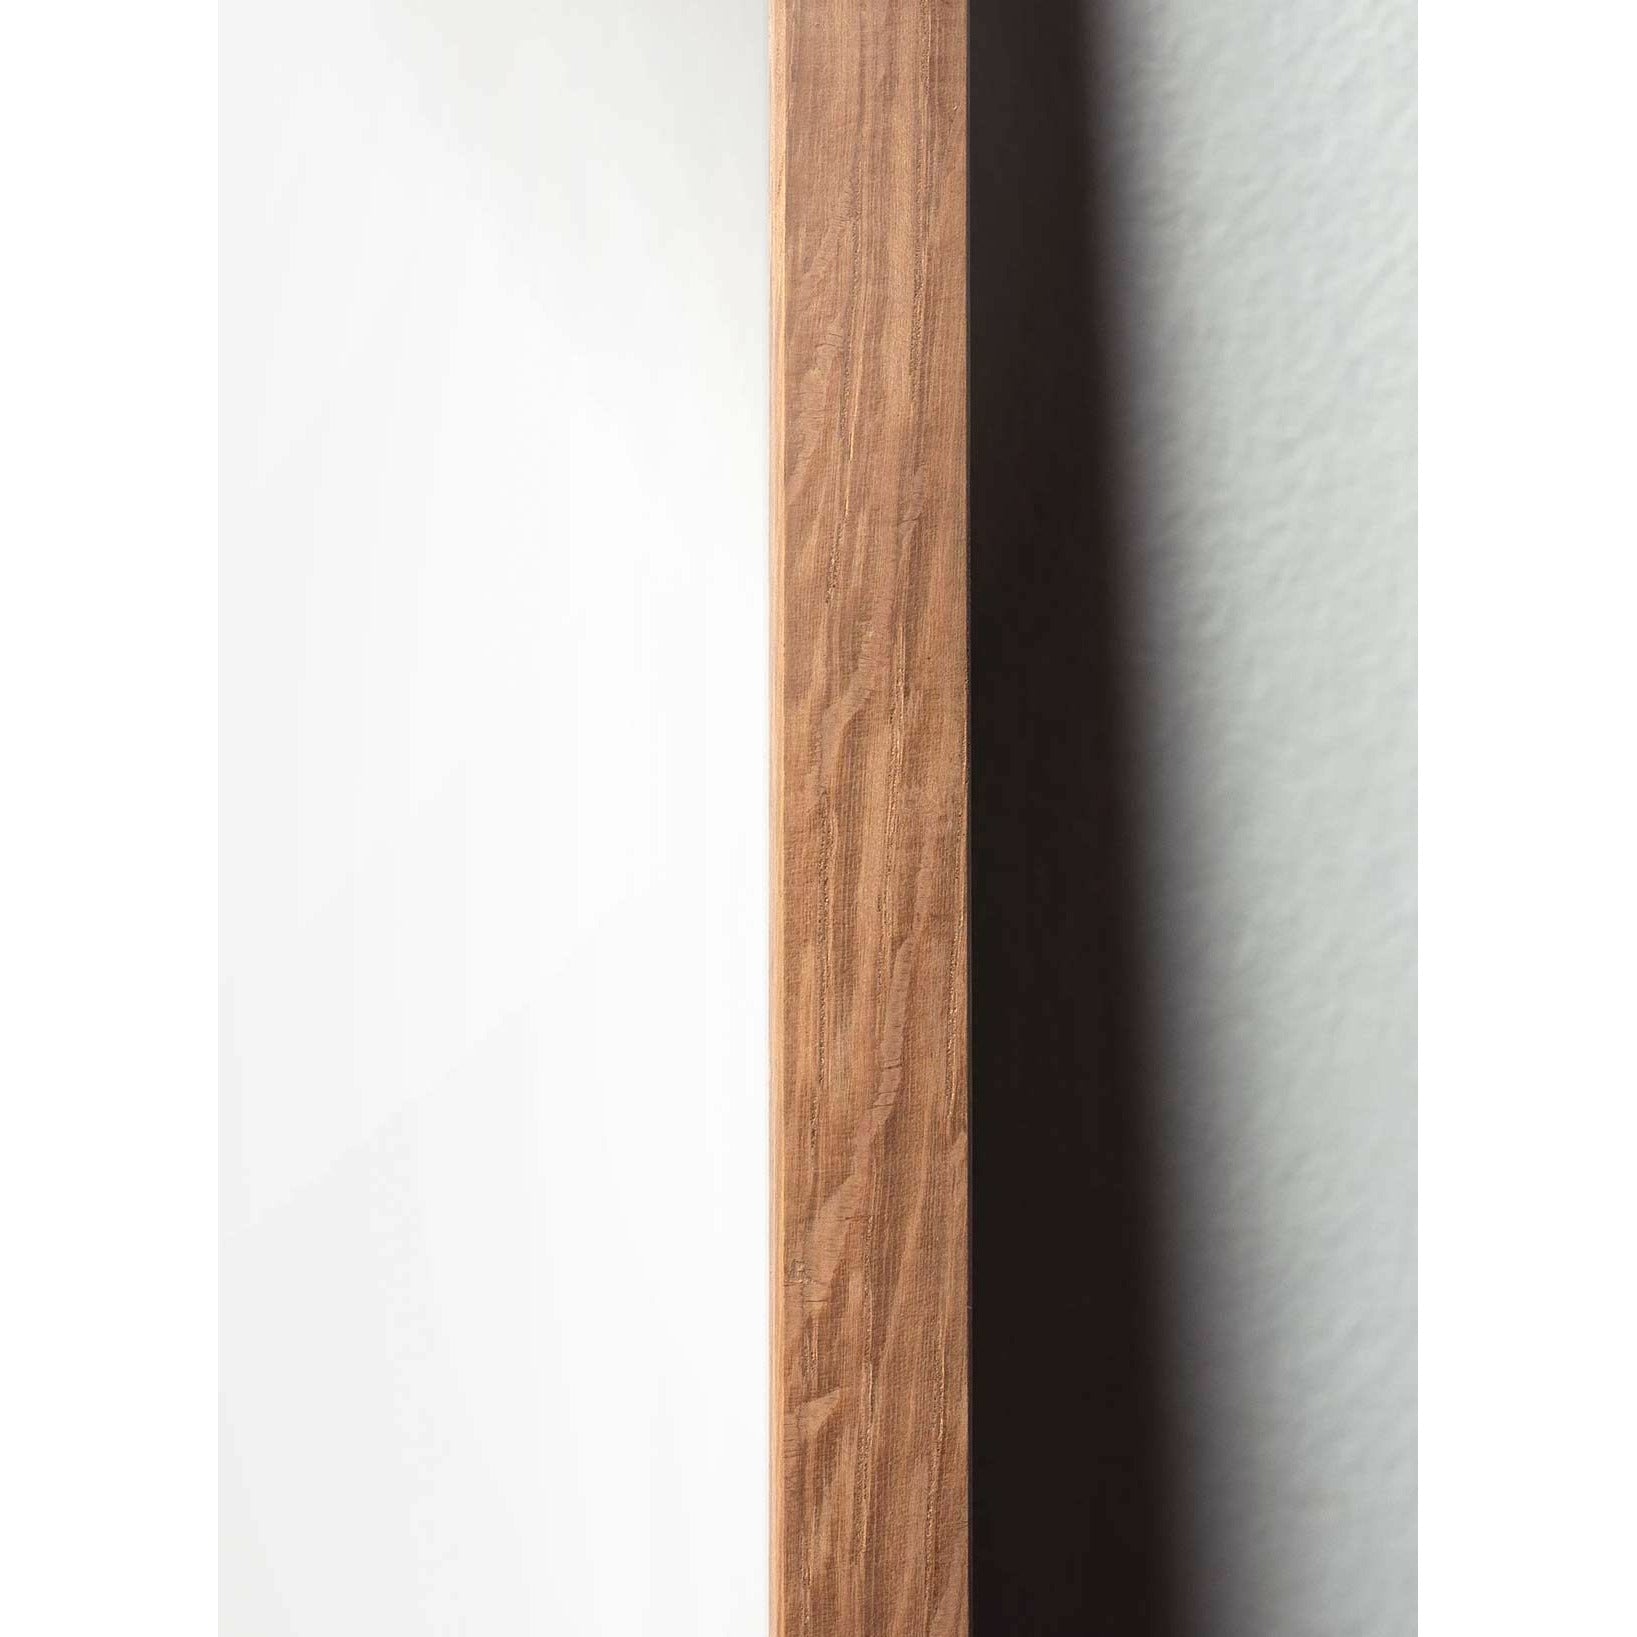 Brainchild Äggfigursaffisch, ram i lätt trä 70x100 cm, brunt